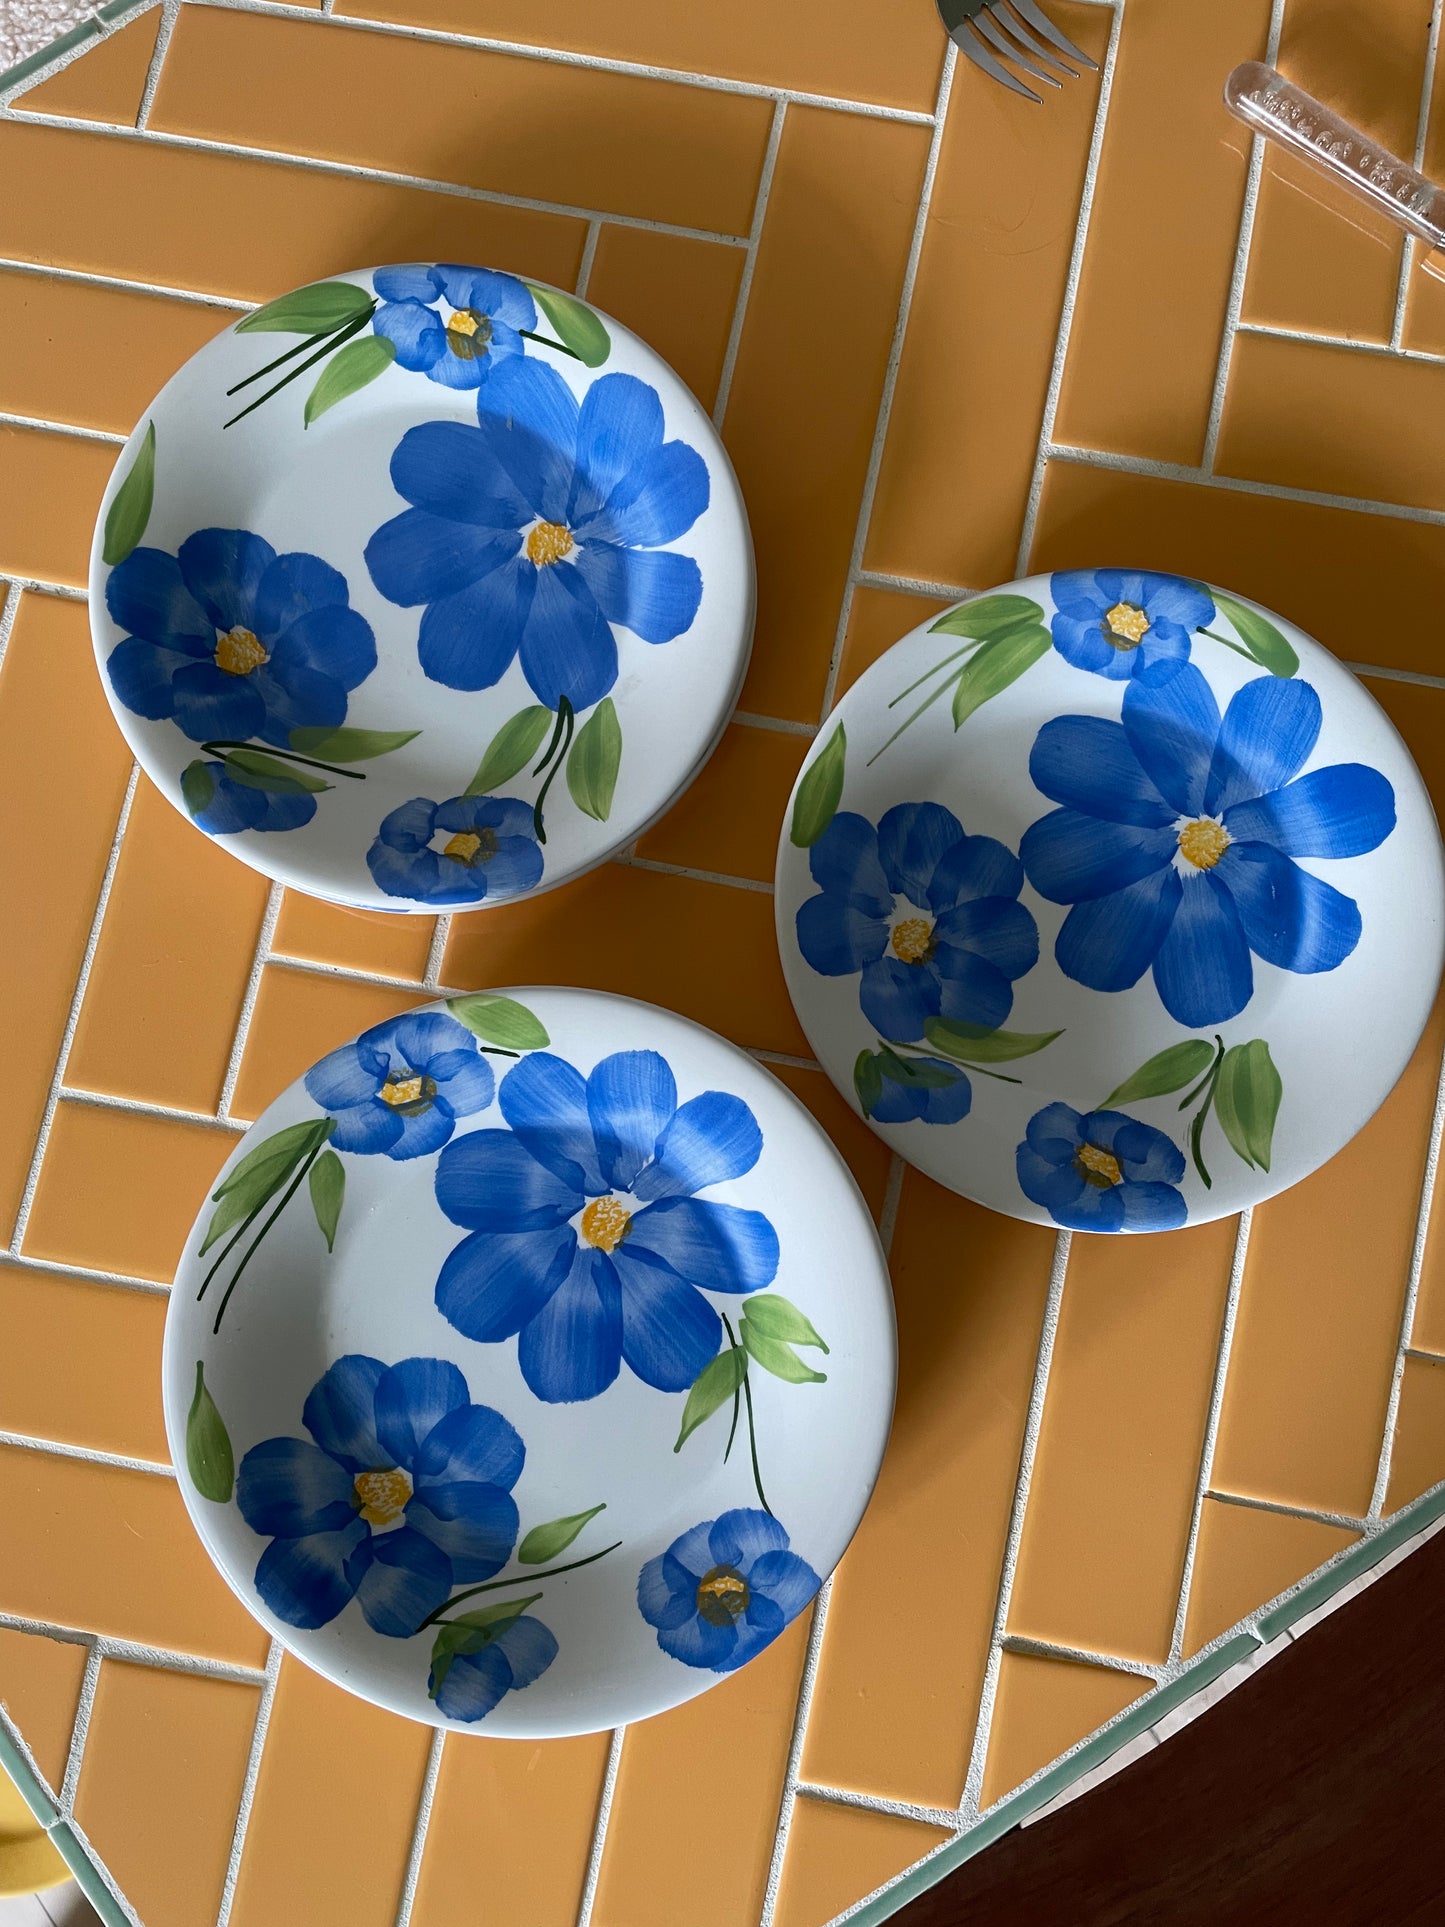 Italian breakfast plates with blue flowers